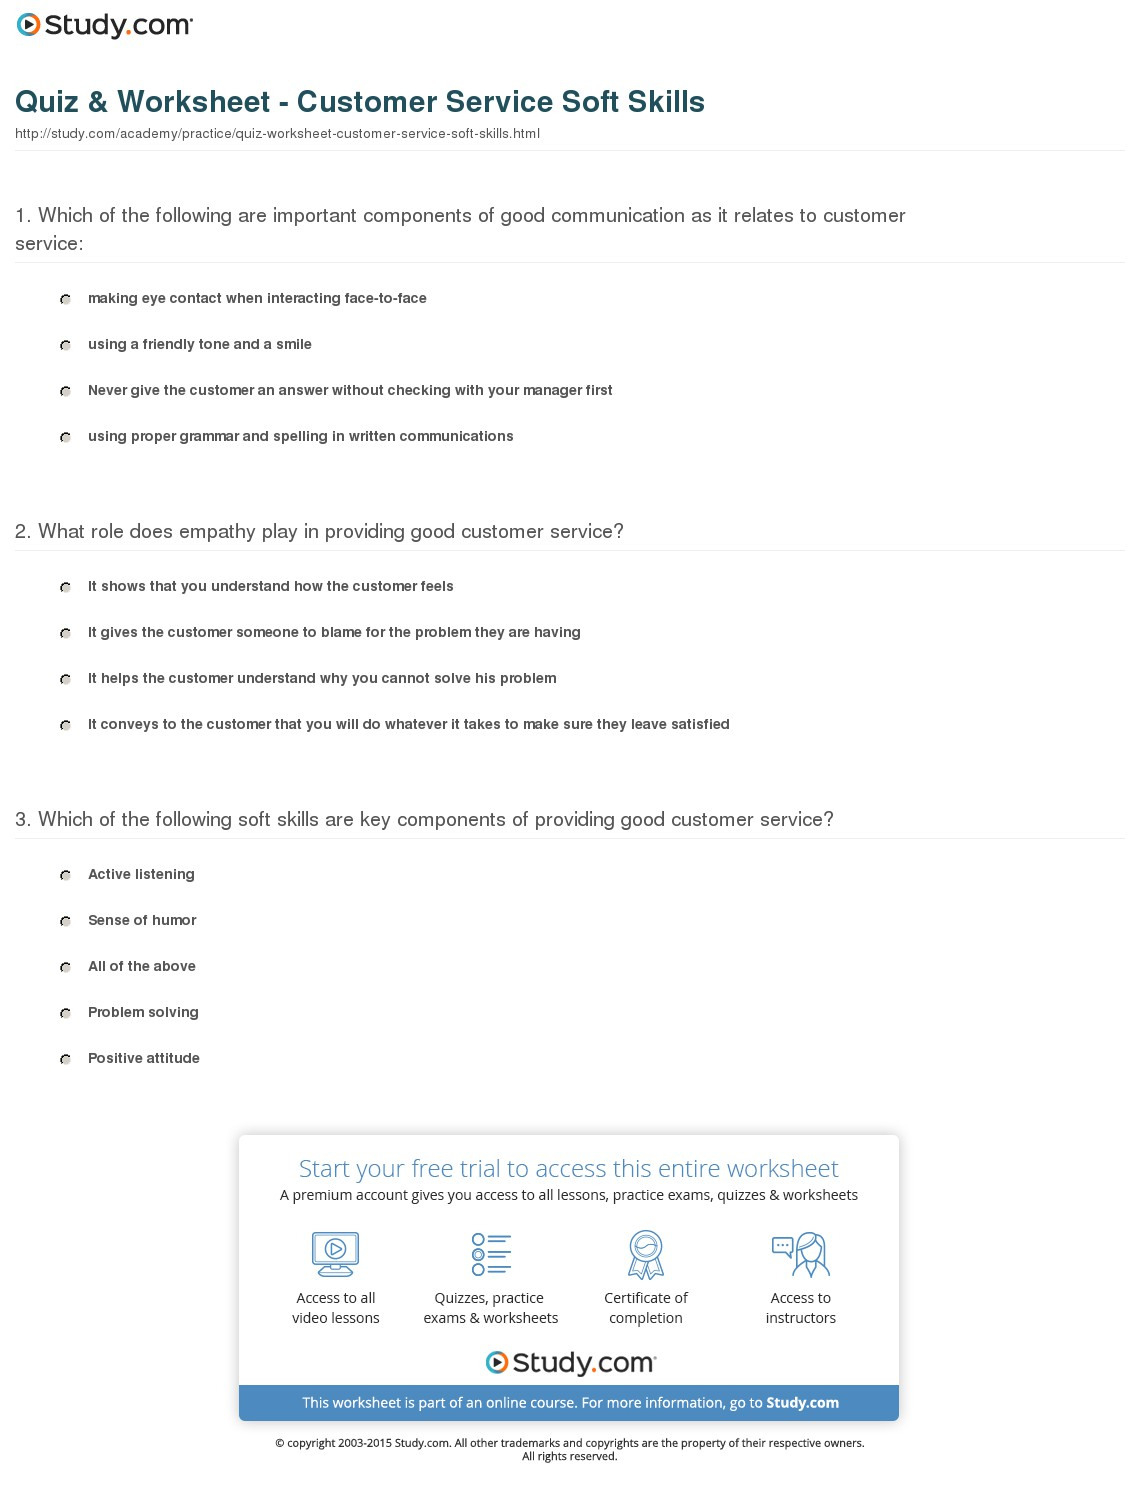 quiz-worksheet-customer-service-soft-skills-study-db-excel